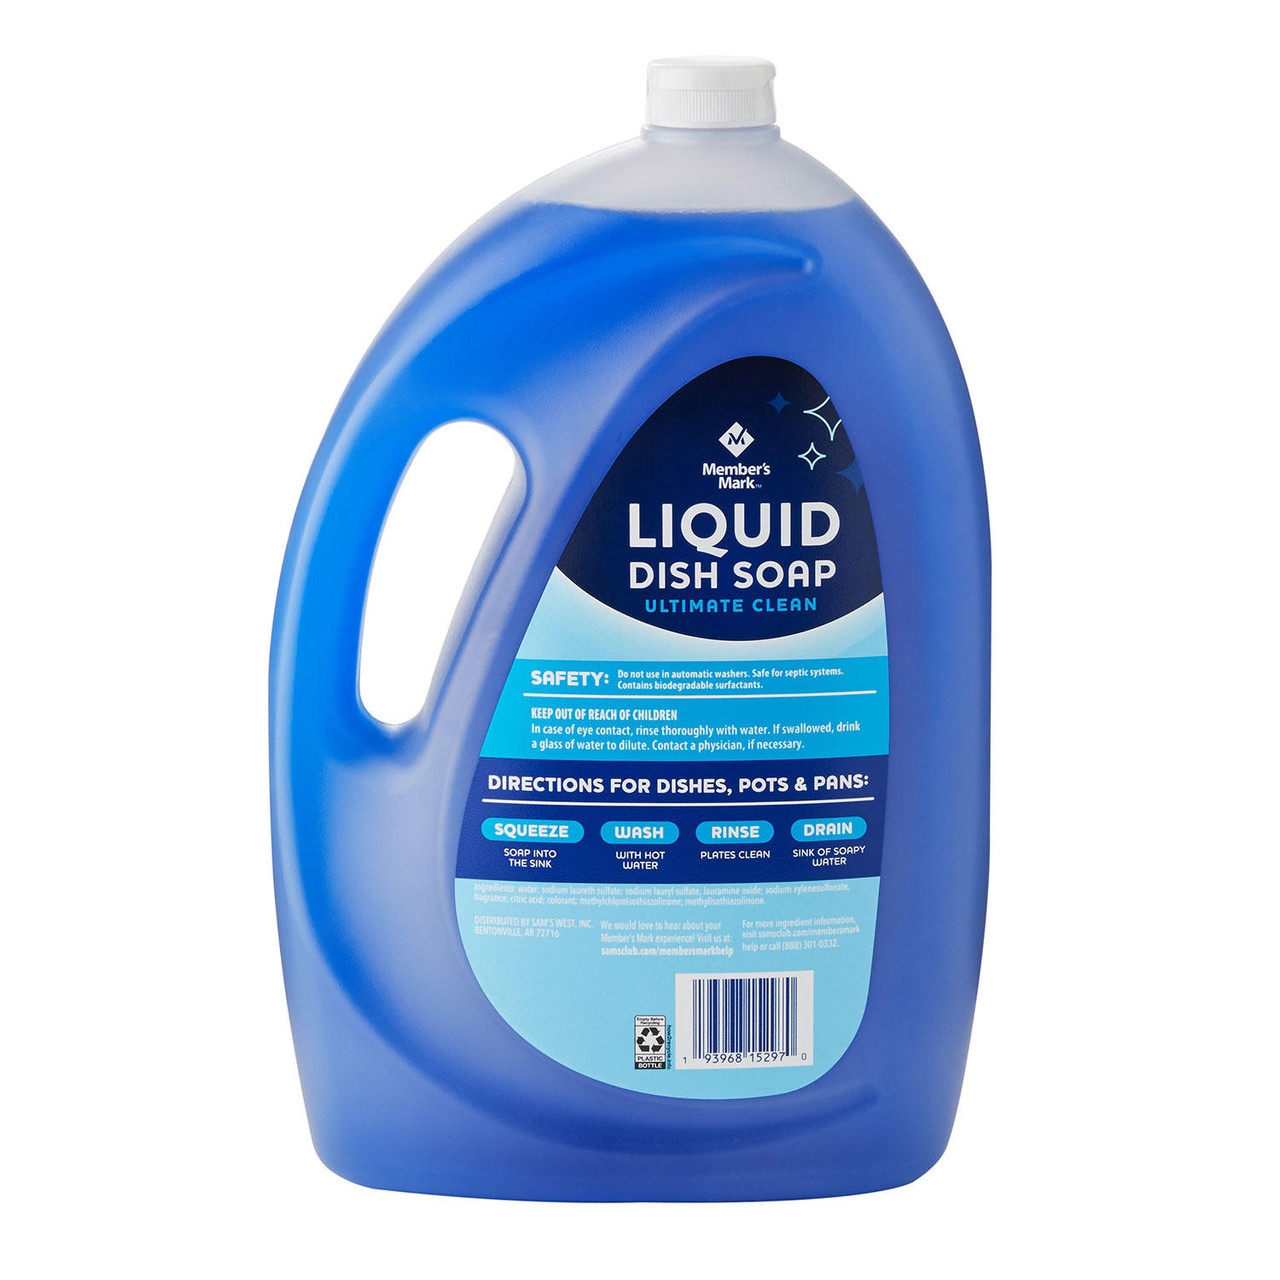 Member's Mark Liquid Dish Soap, Ultimate Clean (100 fl. oz.) - *Pre-Order